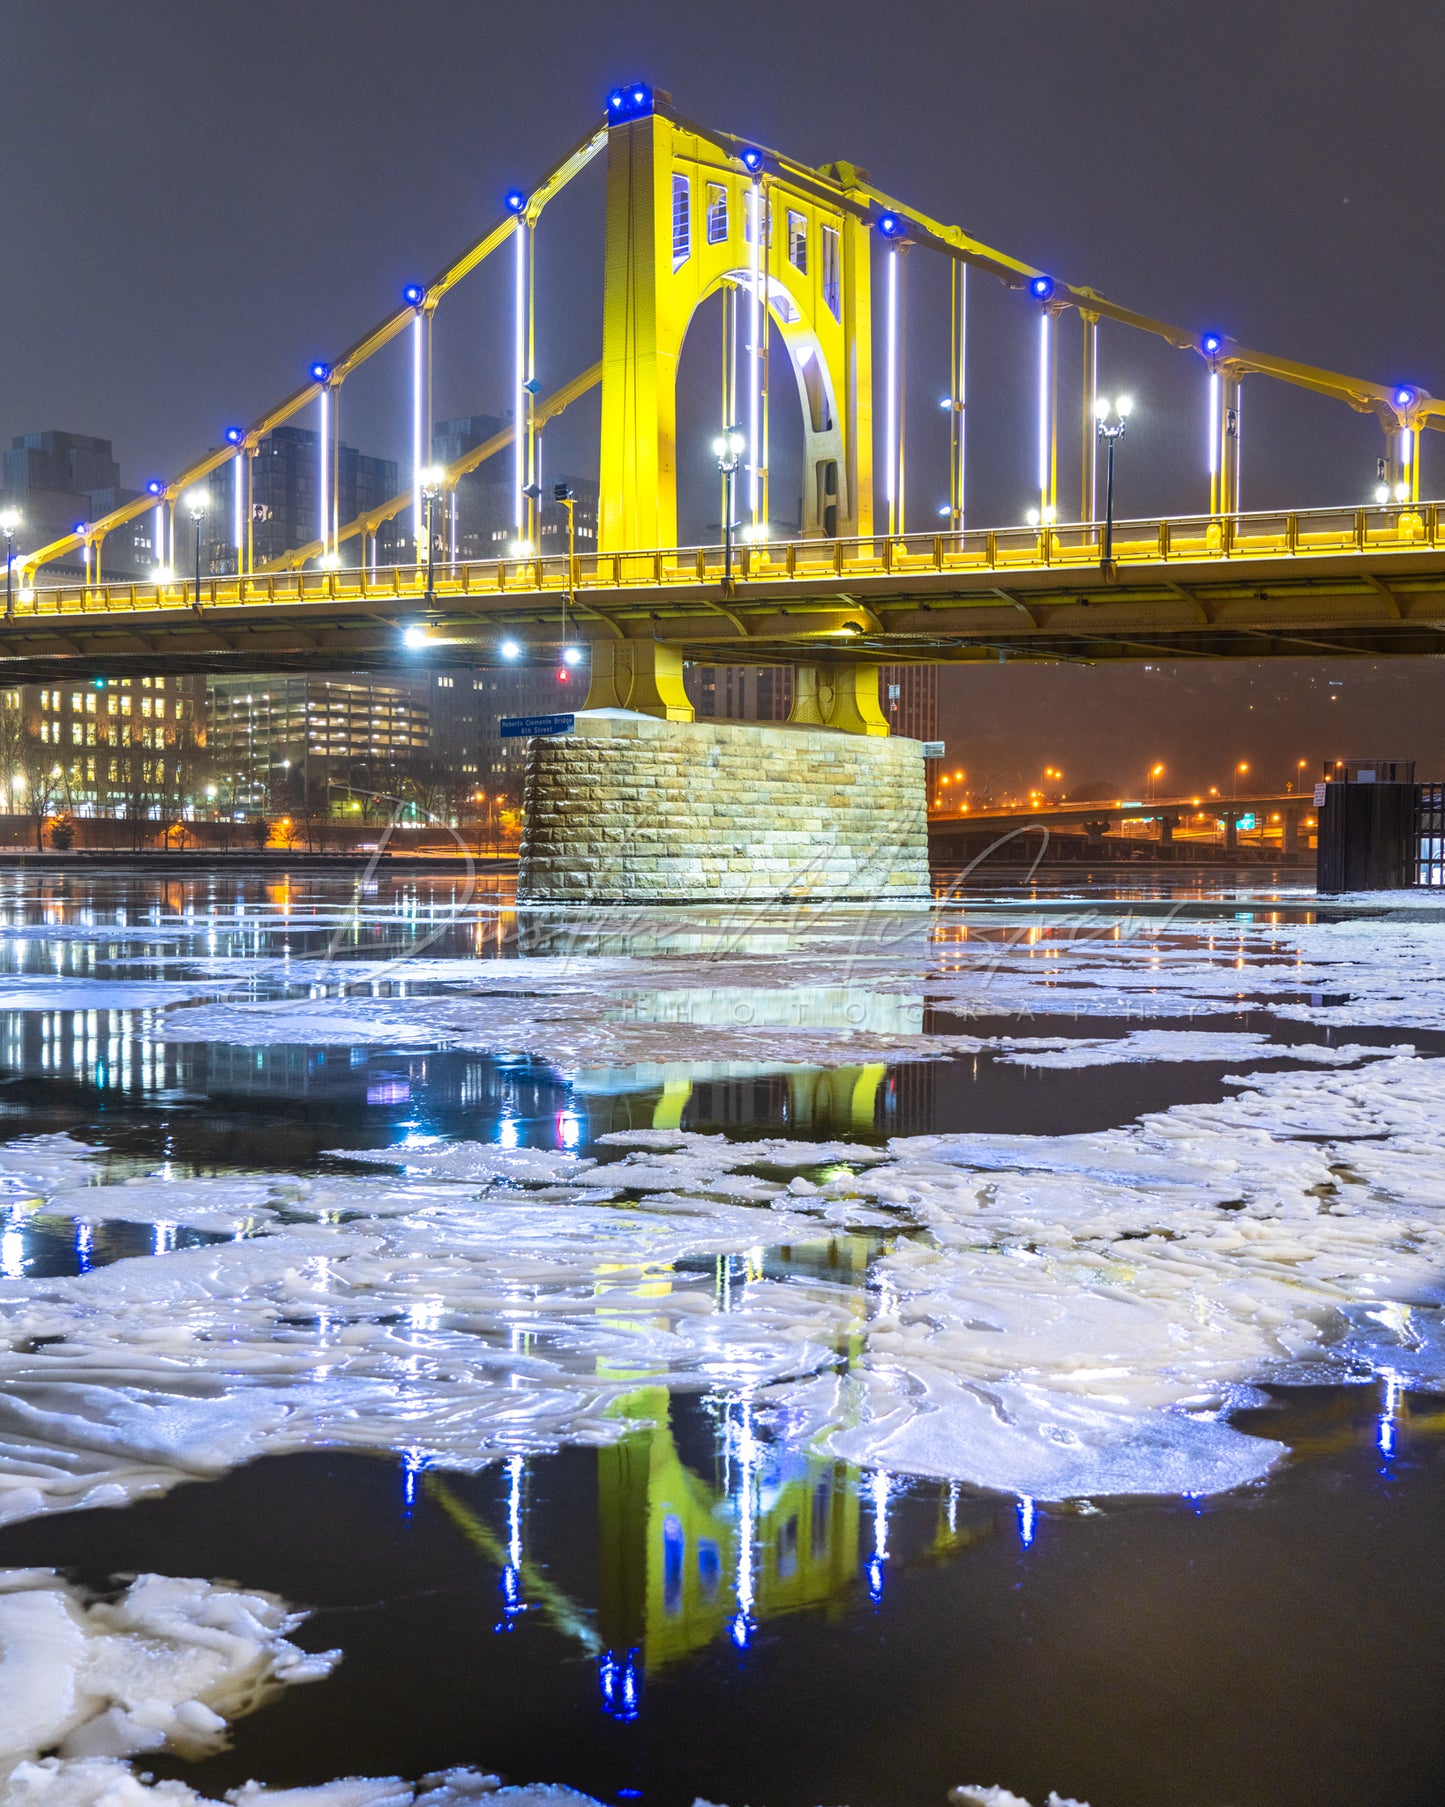 Clemente Bridge Reflecting in the Frozen Allegheny River